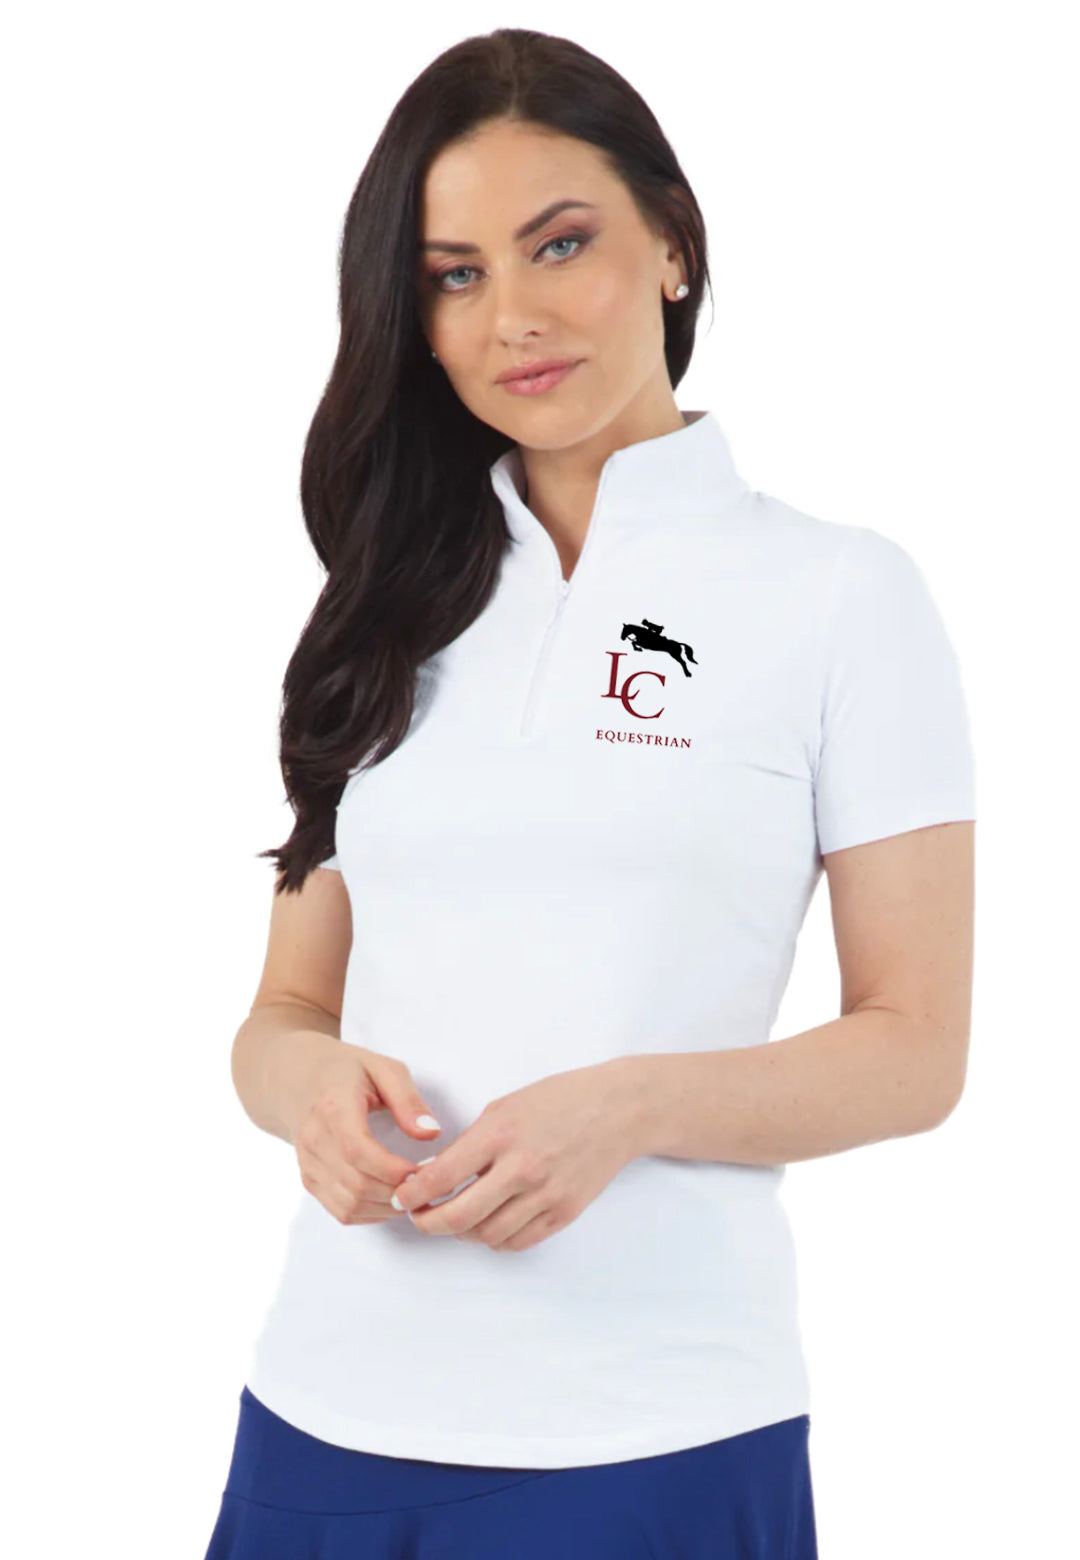 Loomis Chaffee Equestrian IBKÜL® Ladies Short Sleeve Sun Shirt - 2 Color Options